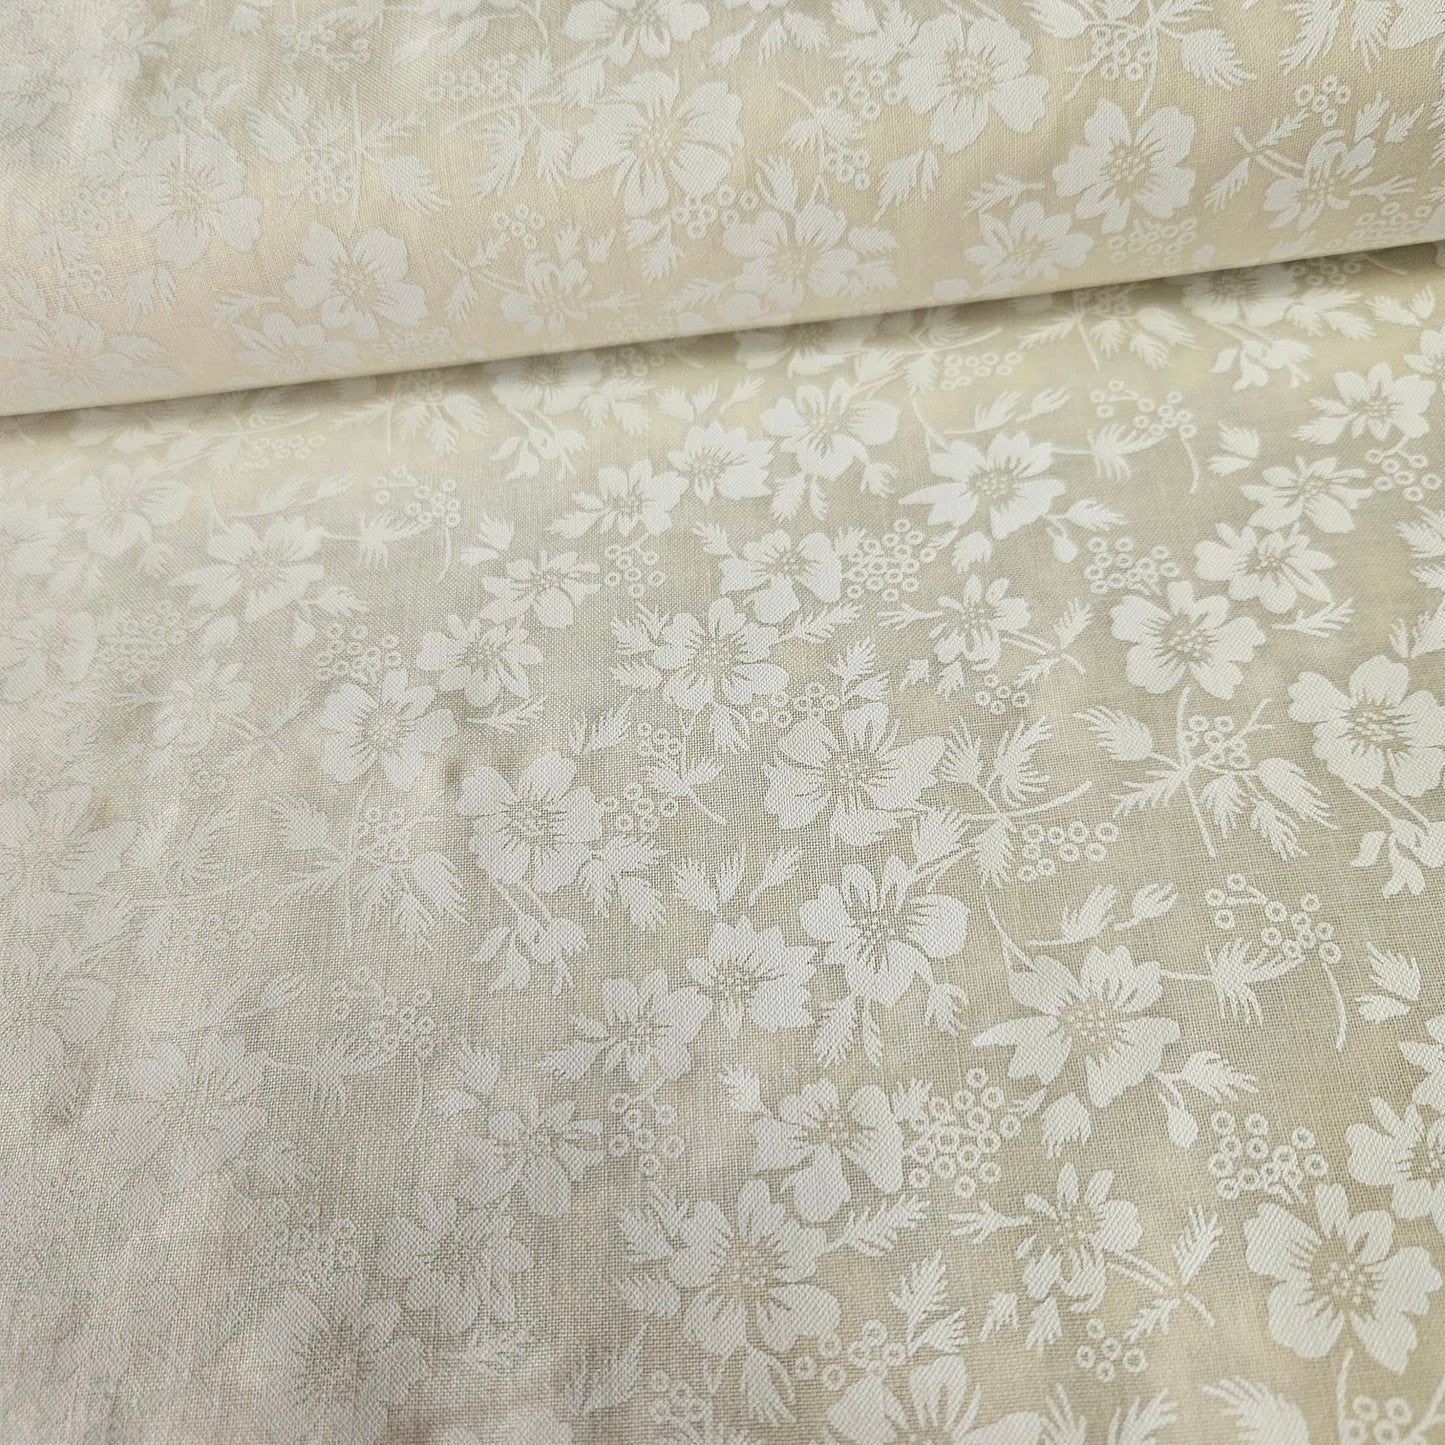 Tone on Tone - White on Cream Flowers 18606 100% Cotton Fabric